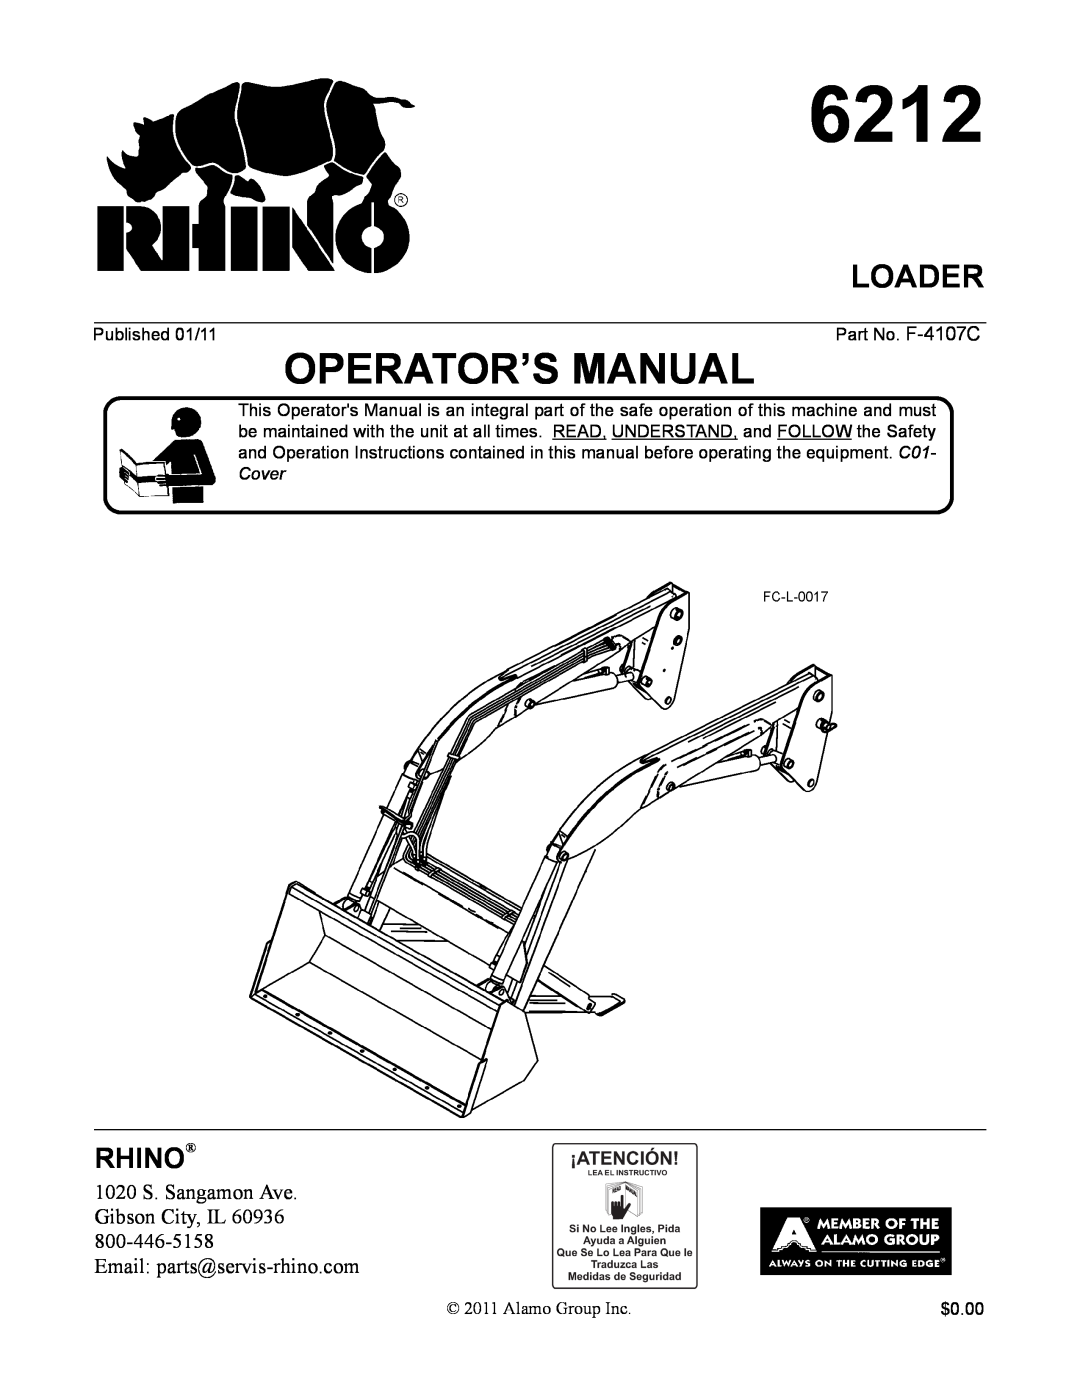 Alamo 6212 manual Loader, Operator’S Manual, Rhino, 1020 S. Sangamon Ave Gibson City, IL, Email parts@servis-rhino.com 